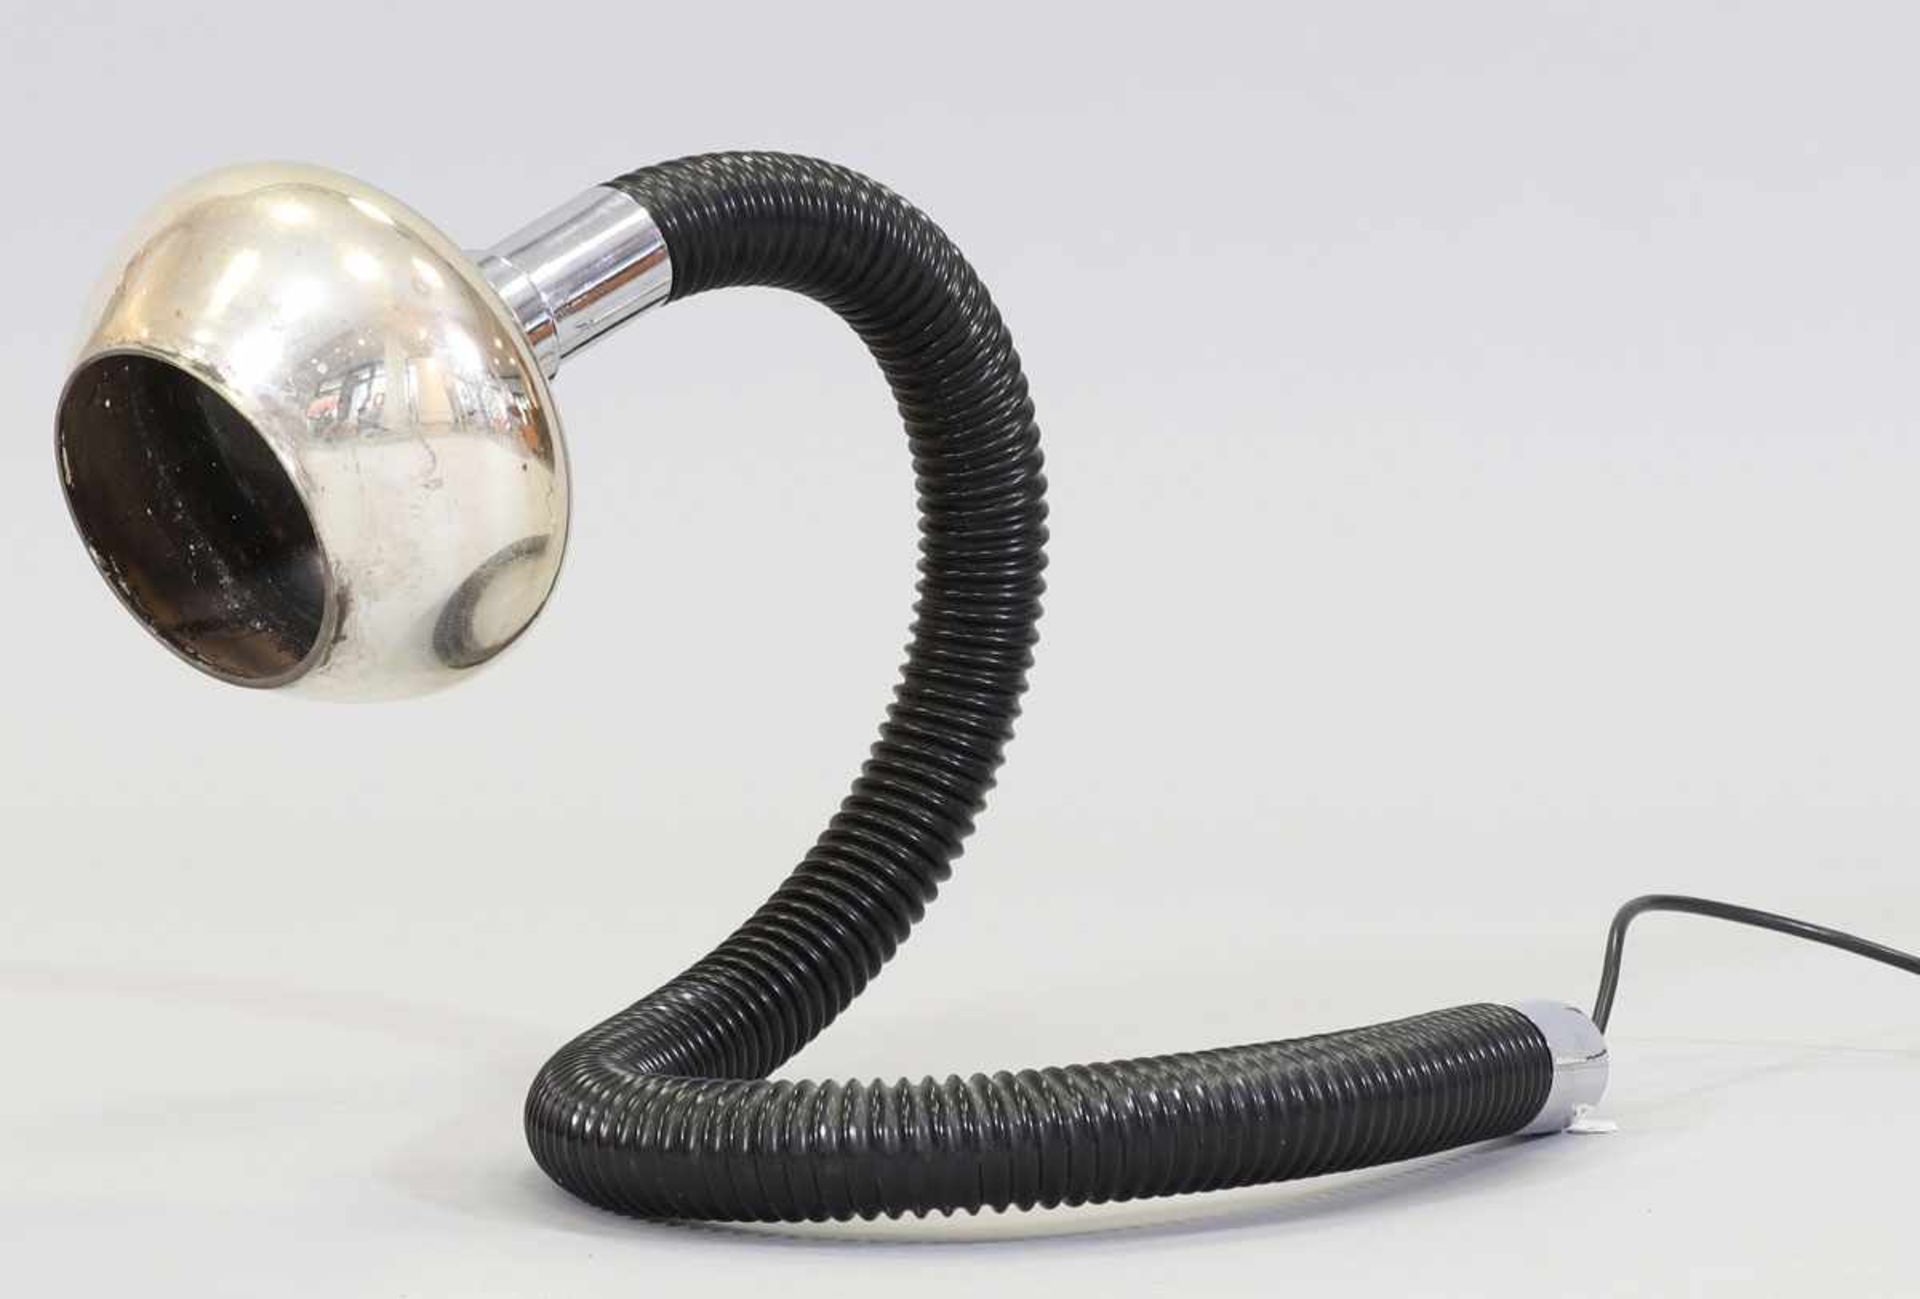 Mid Century SpirallampeUm 1960. Chrom. Kunststoff. H. 51 cm. Rest.bed.- - -22.00 % buyer's premium